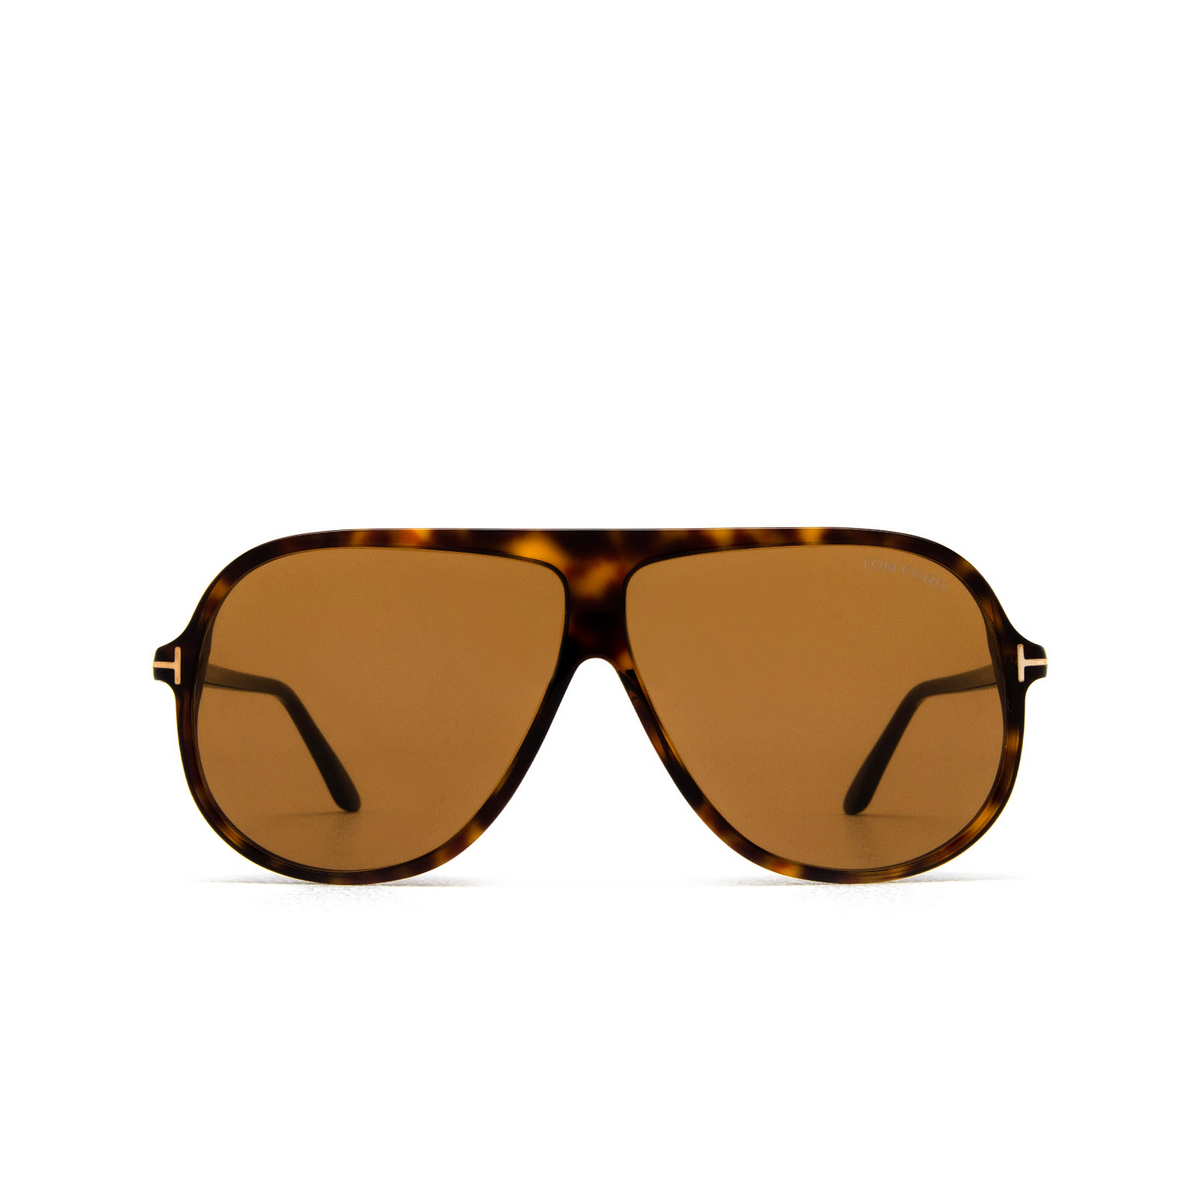 Tom Ford SPENCER-02 Sunglasses 53E Blonde Havana - front view